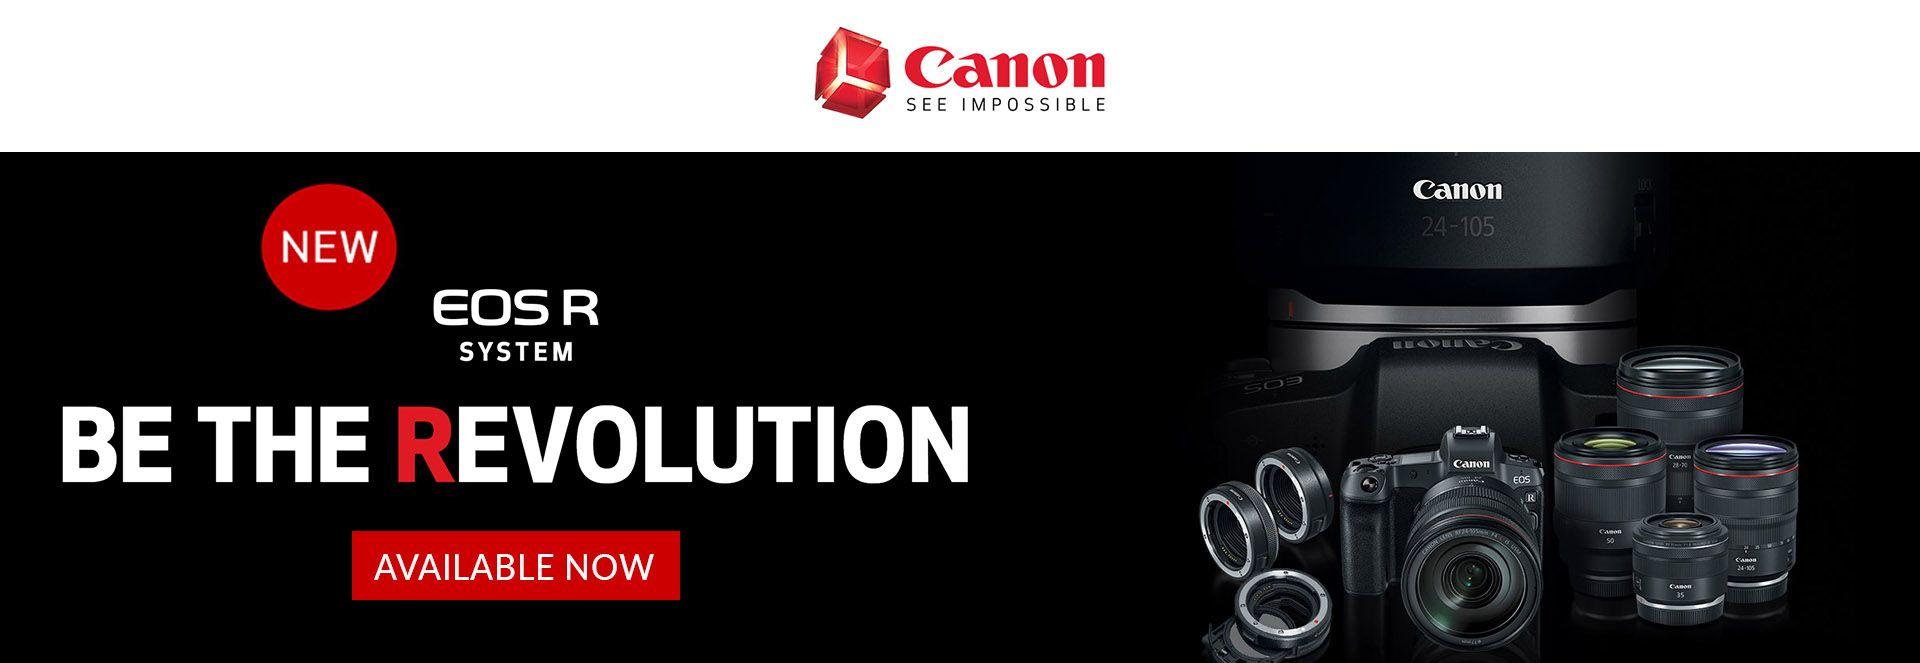 Canon See Impossible Logo - Buy DSLR & Professional Camera Equipment | Camera Shop NY